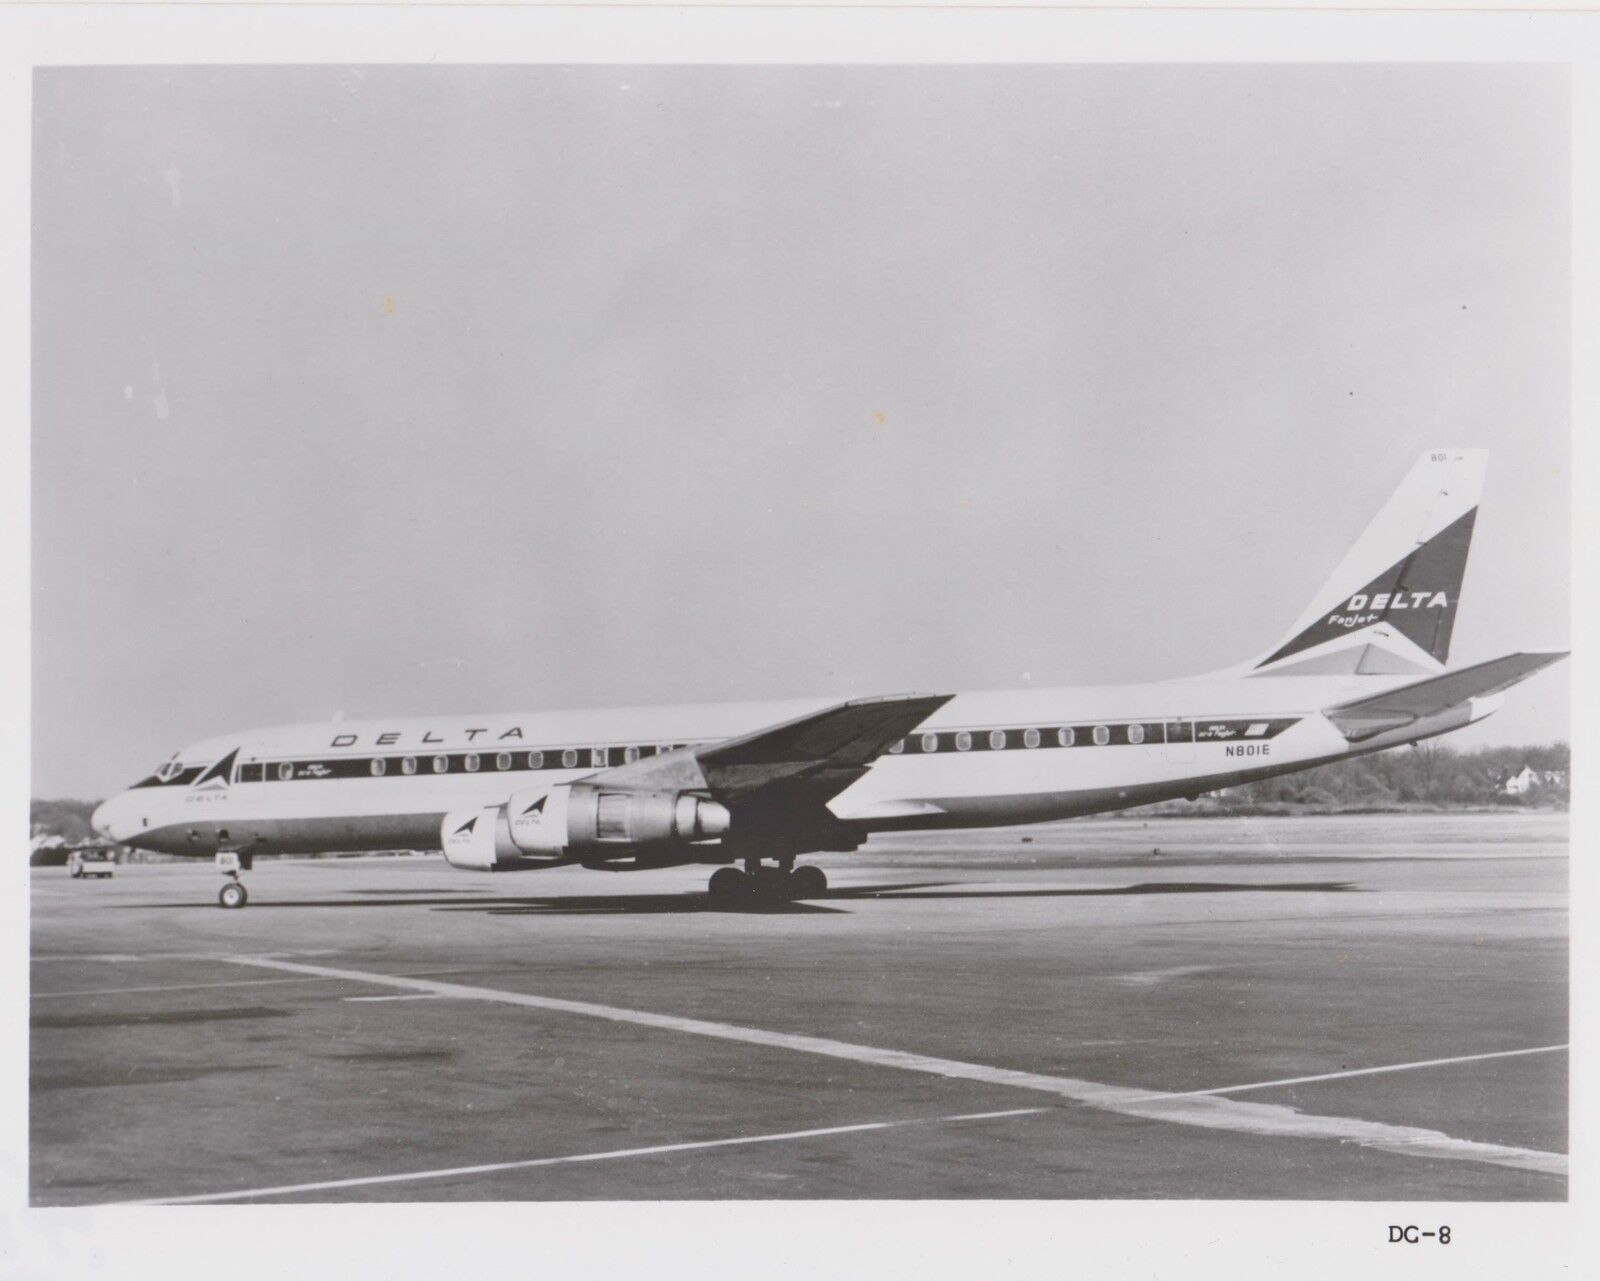 DELTA AIR LINES - DC 8 ON TARMAC LH - BLACK & WHITE 8 X 10  